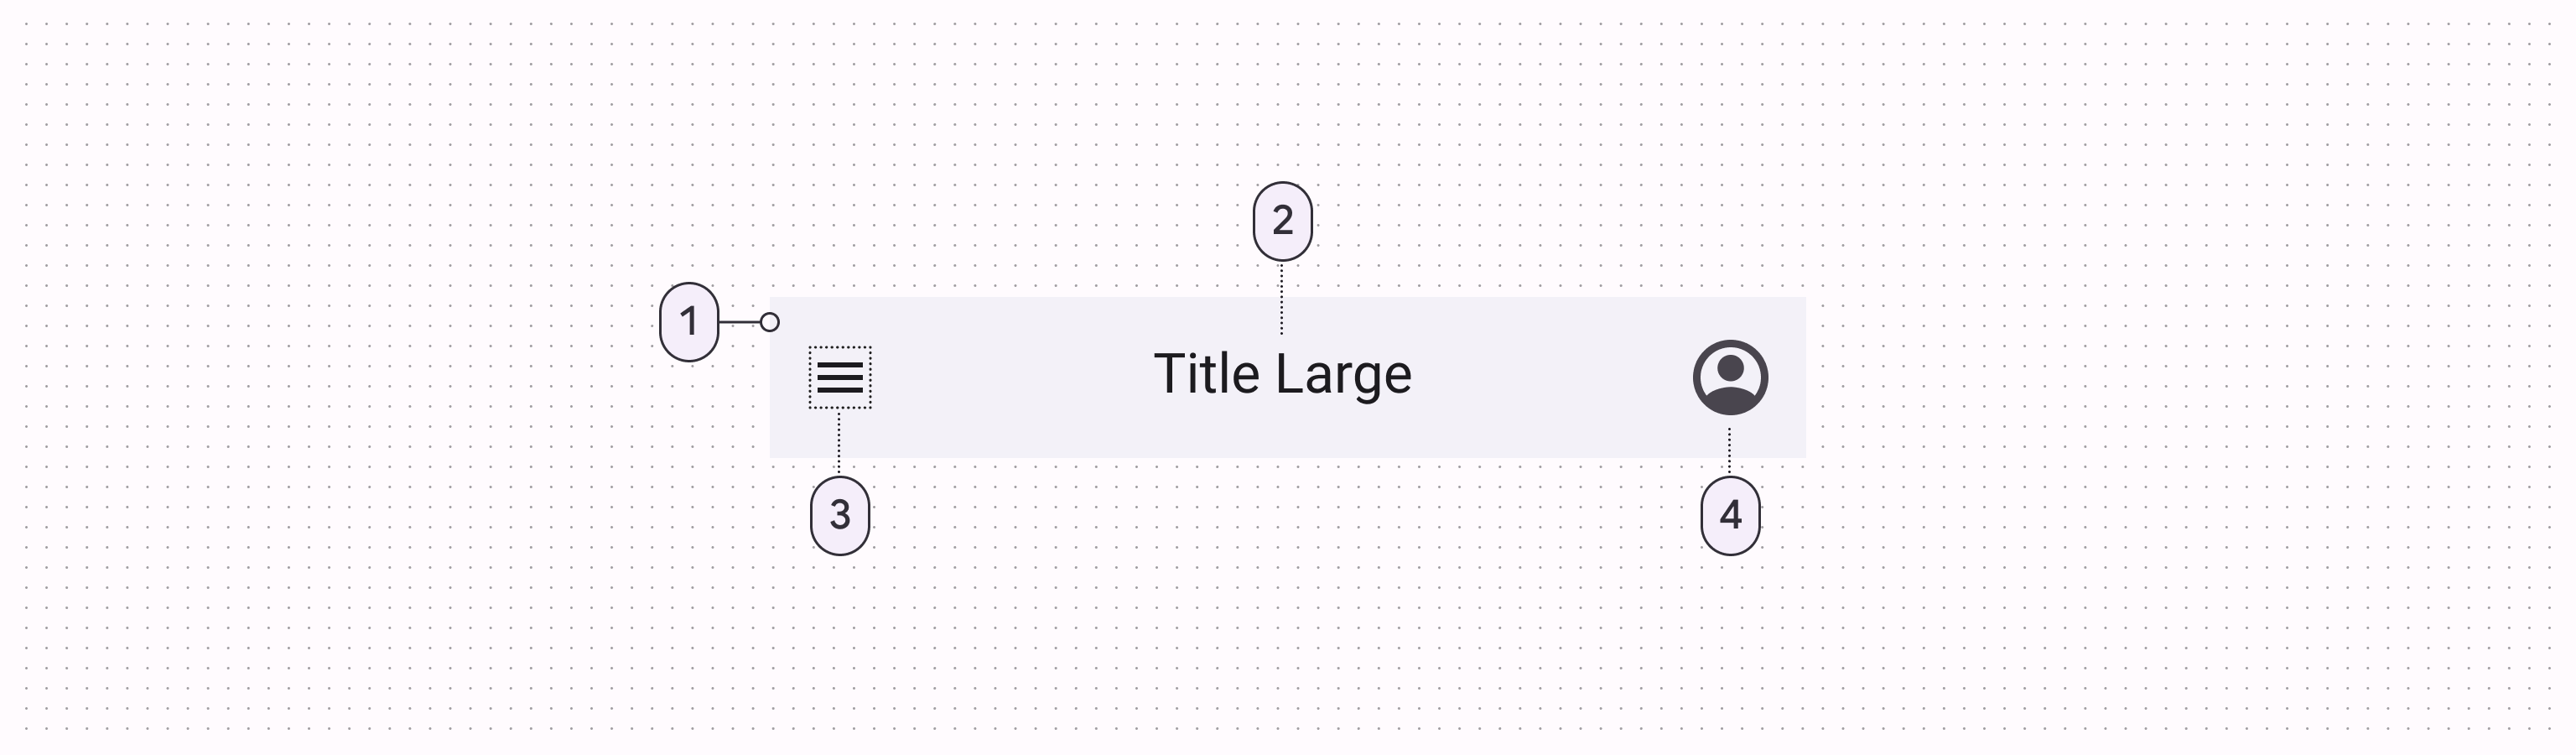 Center-aligned top app bar image